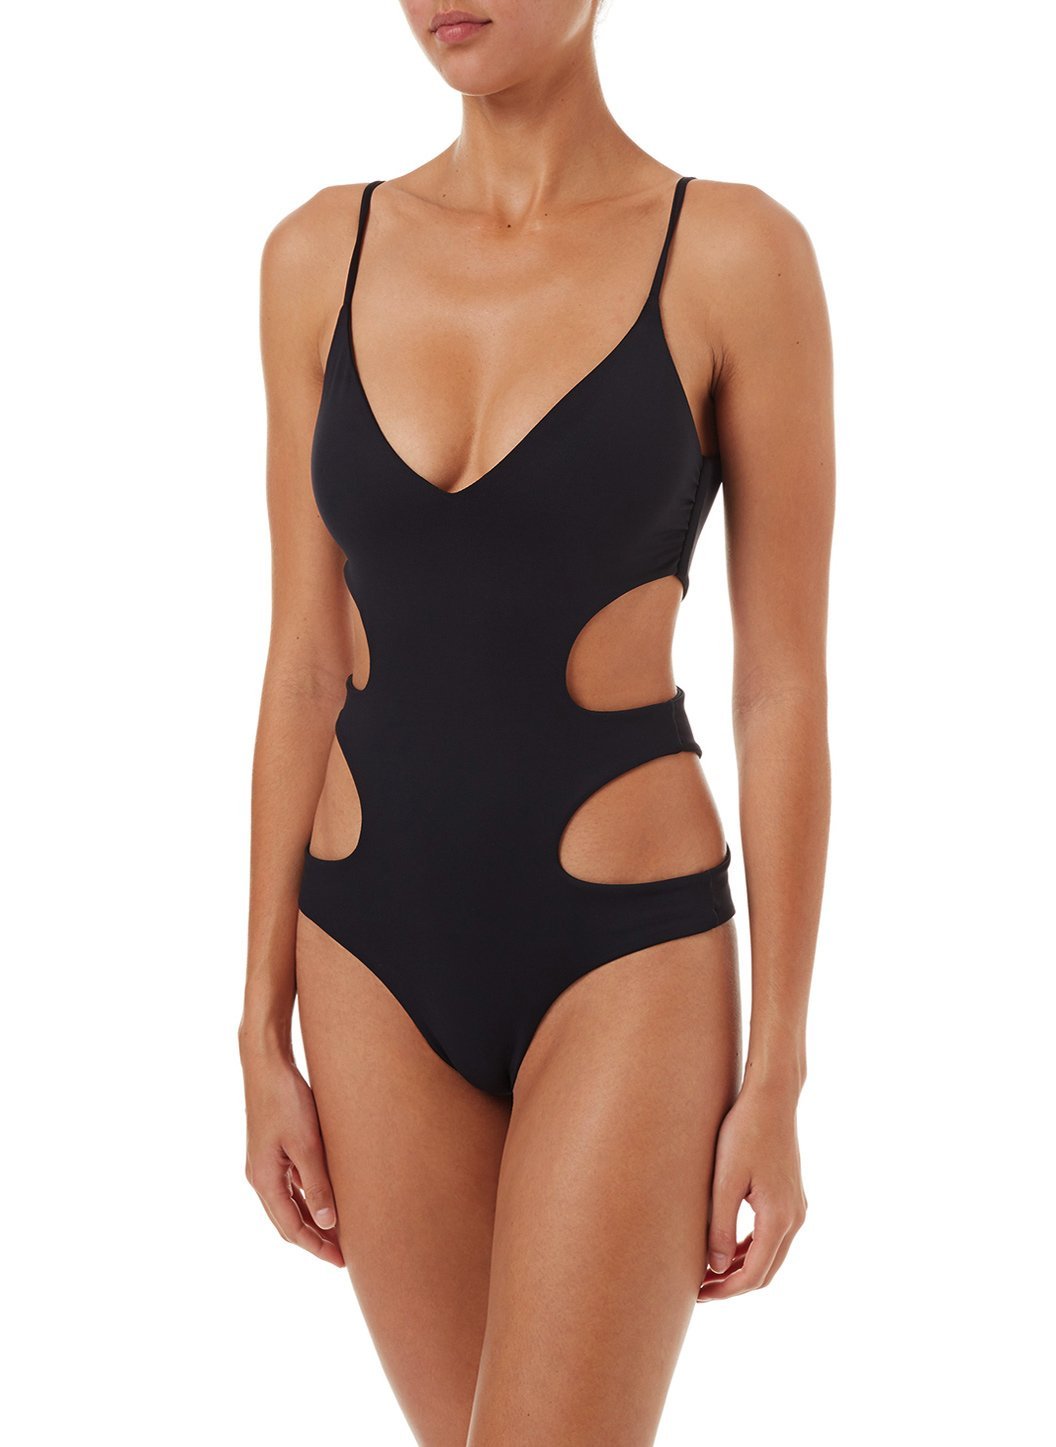 santorini black overtheshoulder cutout onepiece swimsuit 2019 F